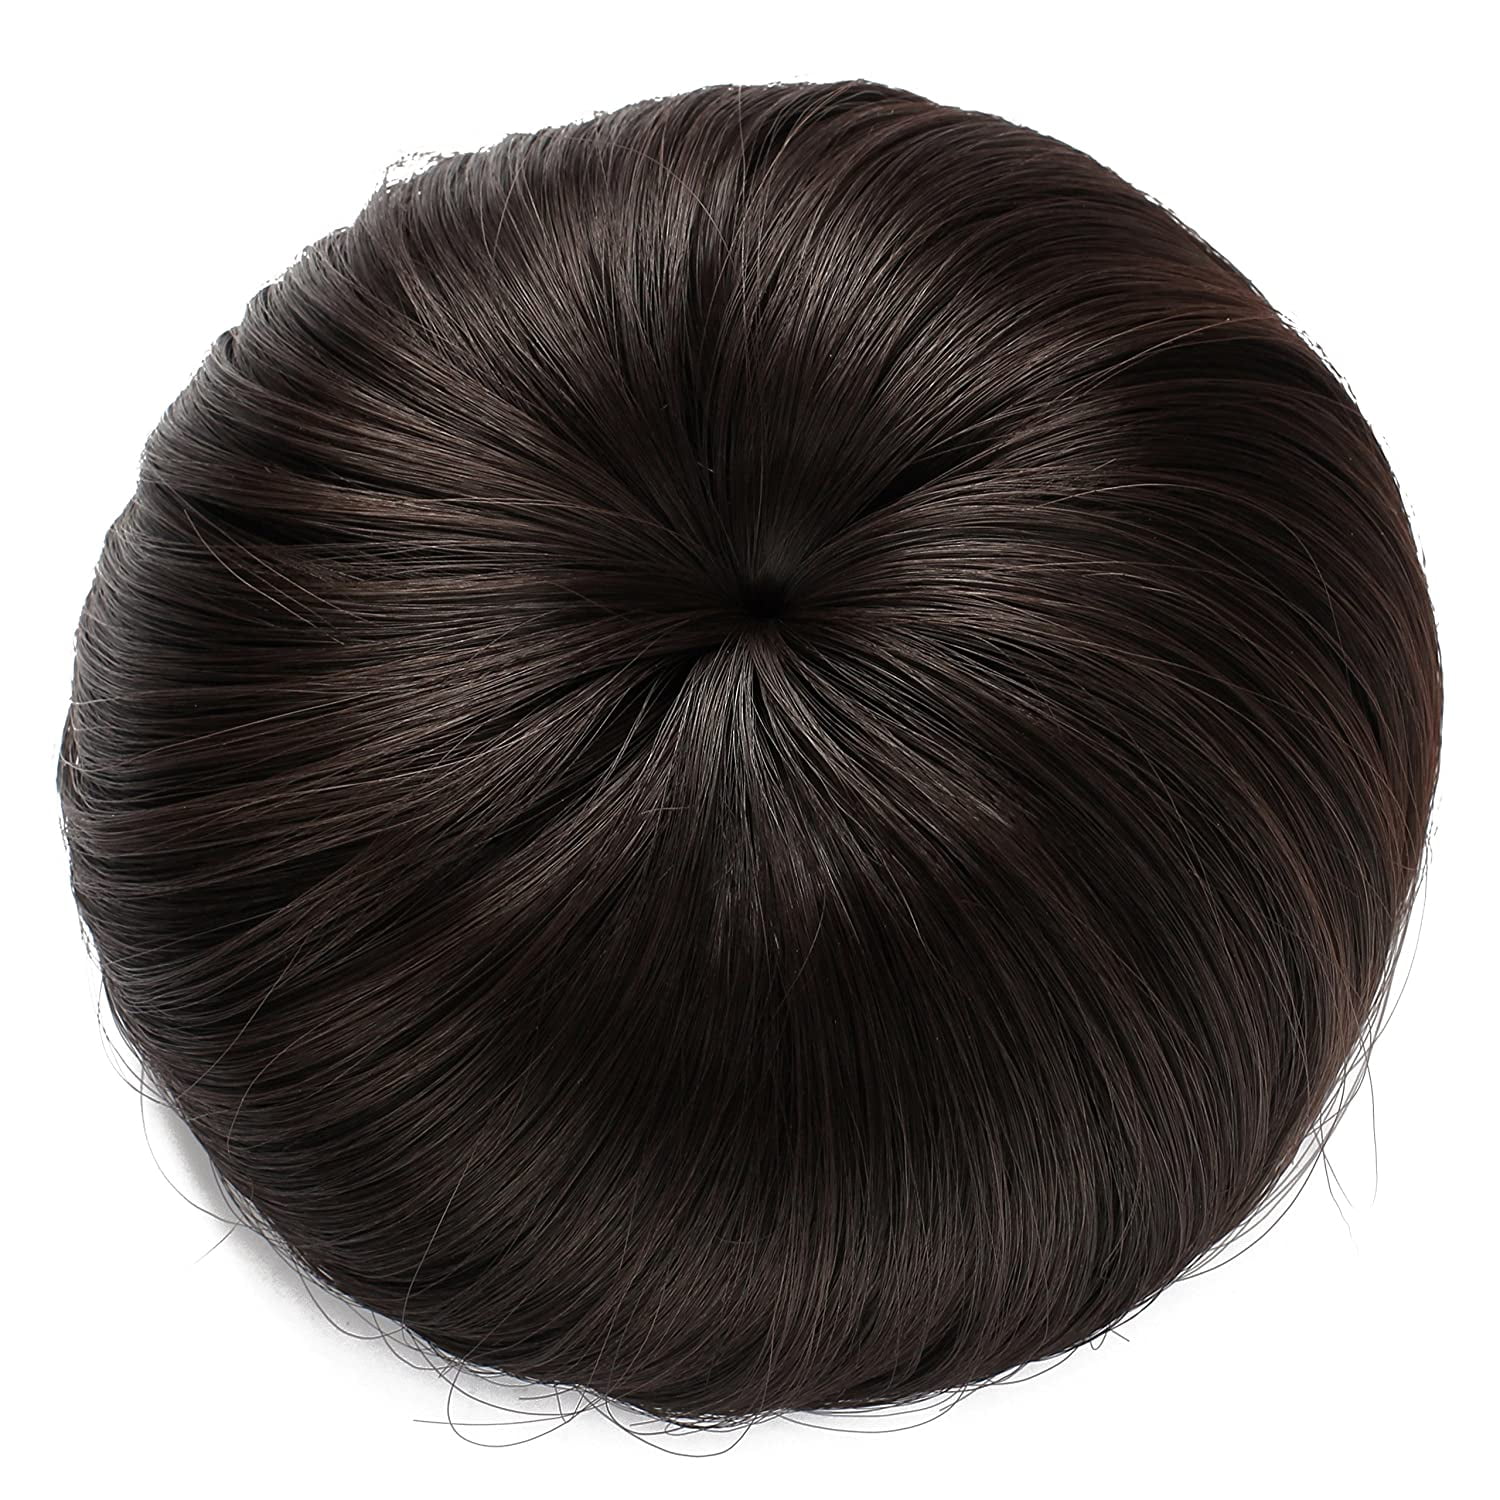 Onedor Synthetic Fiber Hair Extension Chignon Donut Bun Wig Hairpiece (4# -  Dark Brown) … 